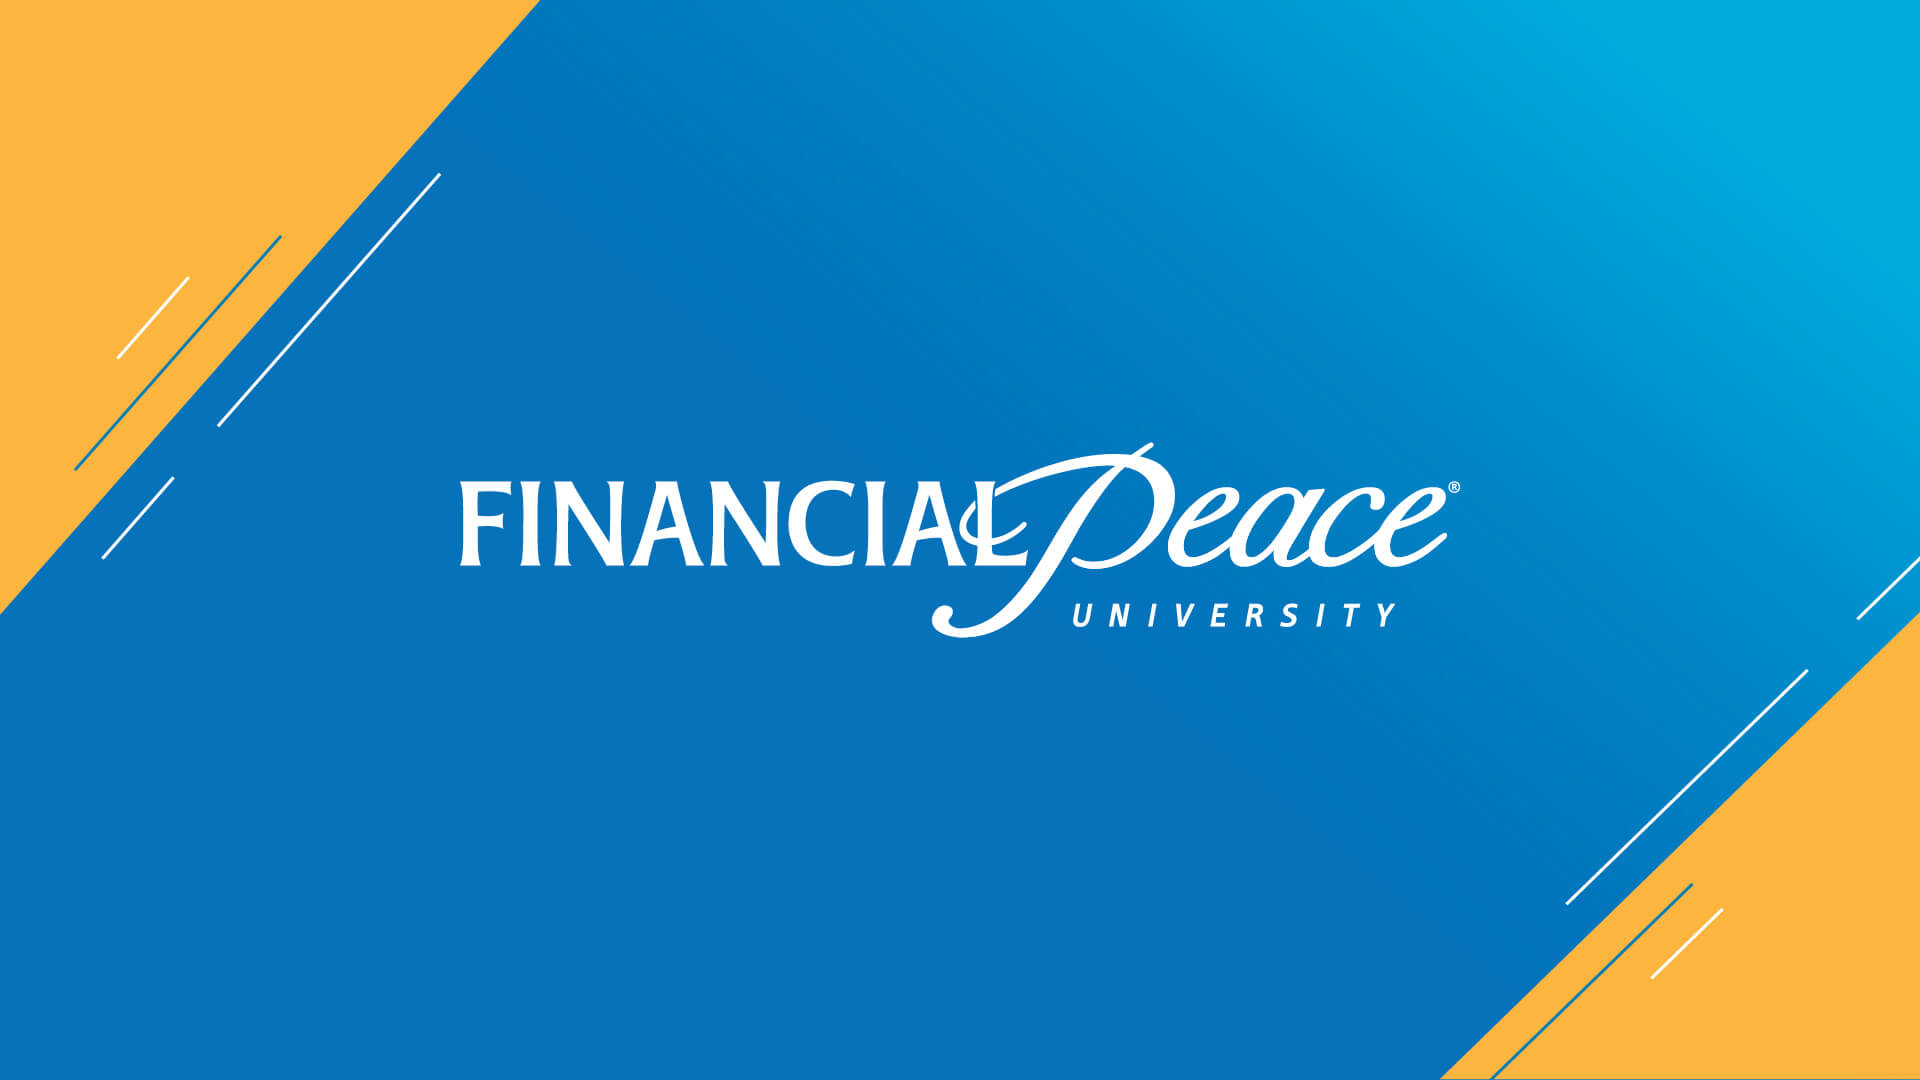 Financial Peace